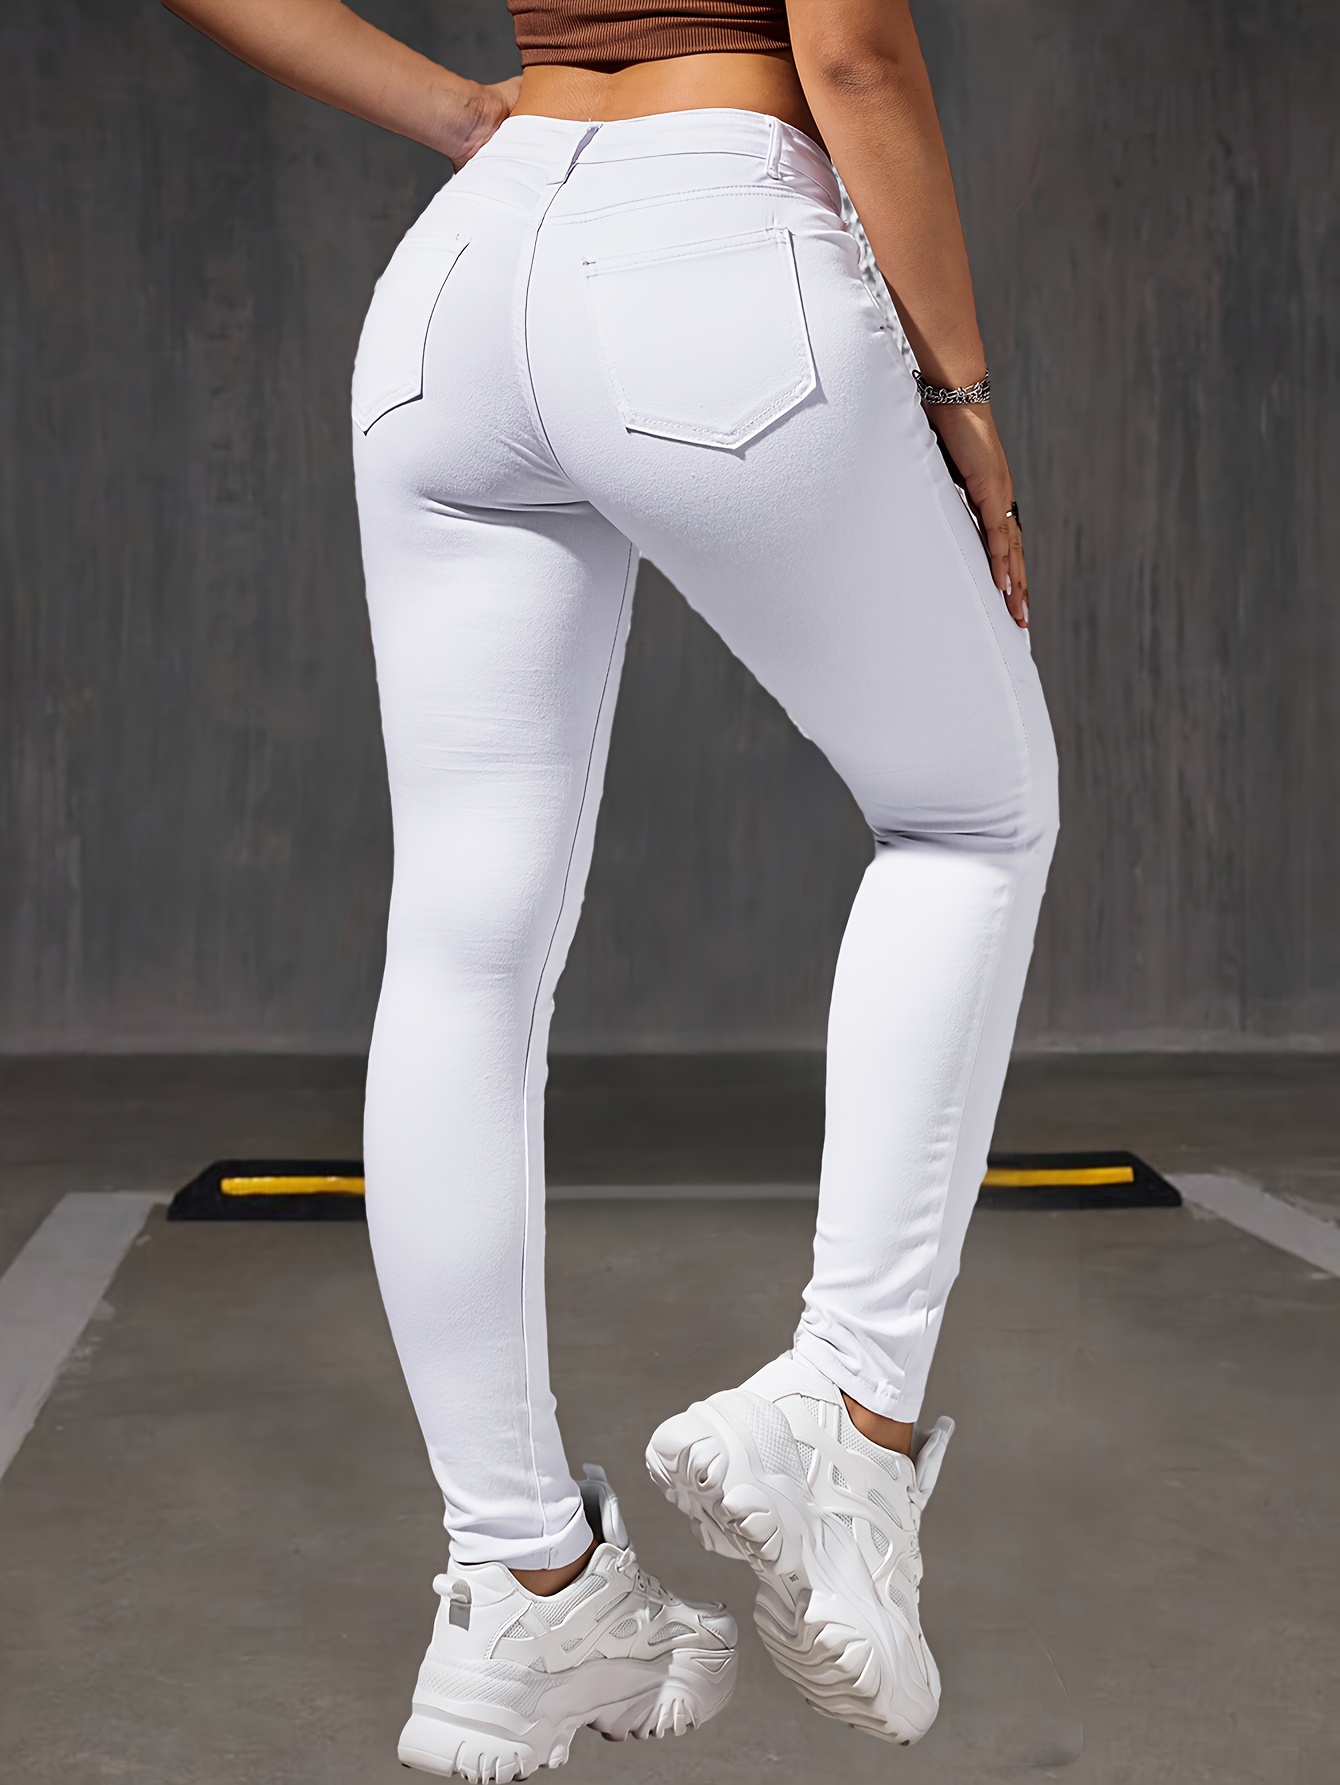 vbnergoie Womens Skinny Jeans Casual Mid Waist Pants Trousers Pockets  Classic Denim Jeans Worn Out Jeans for Women White Pants for Women Jeans  Ripped